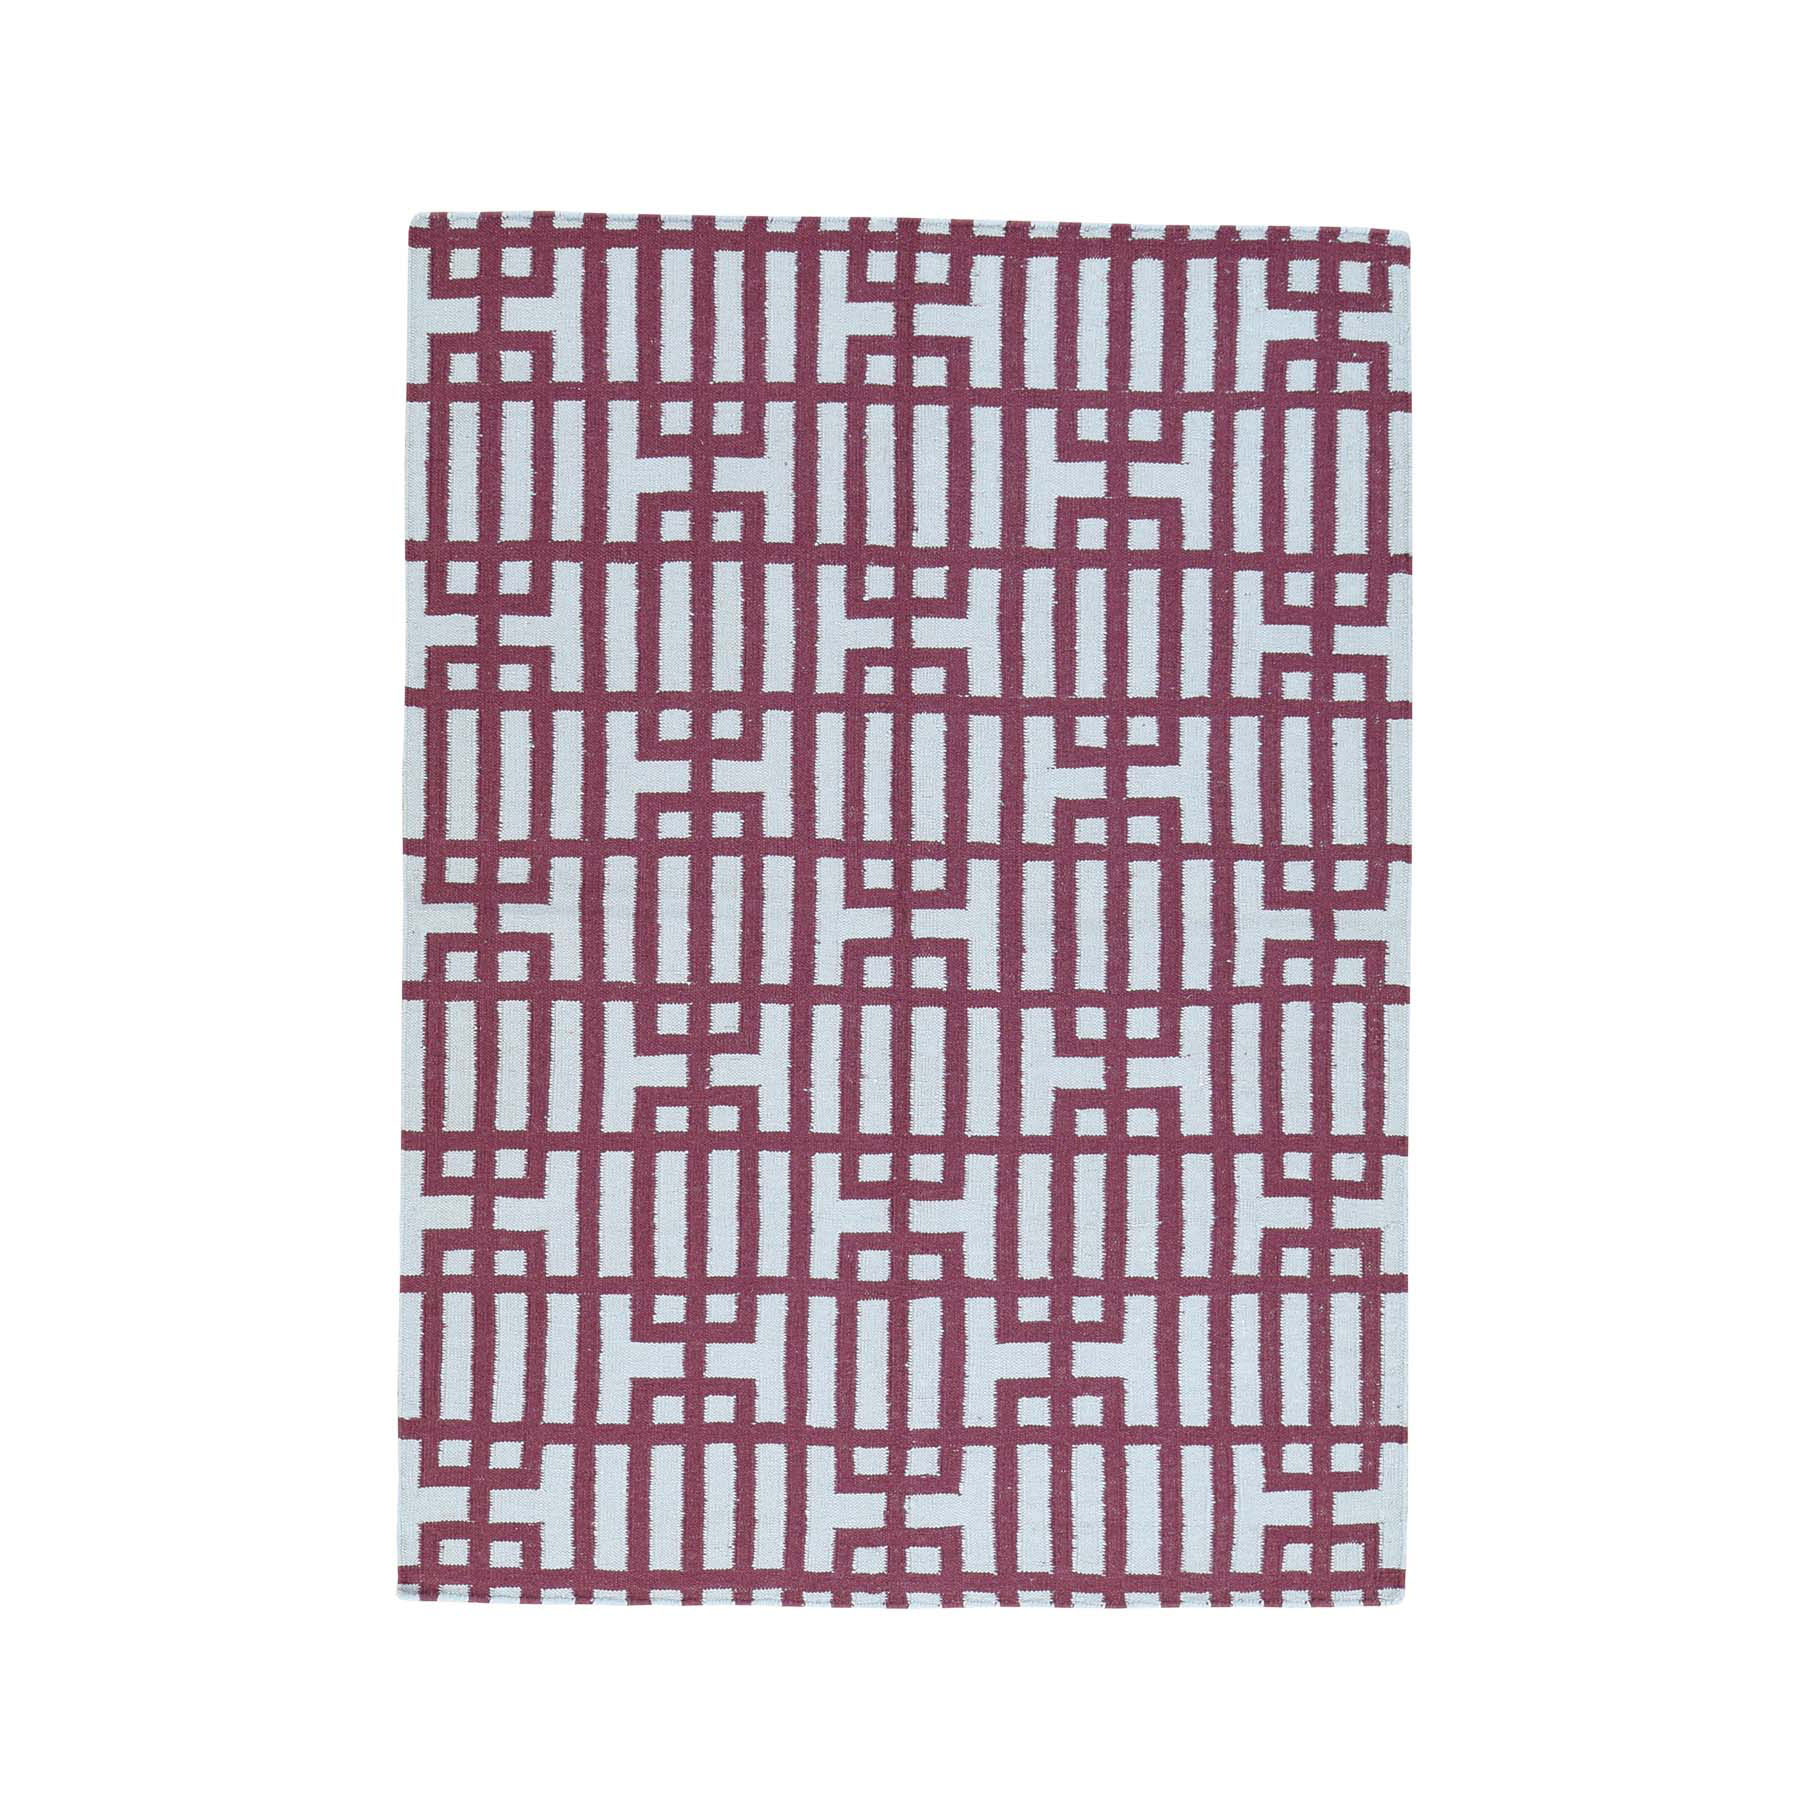 4'4"x6' Hand-Woven Reversible Kilim Flat Weave Pure Wool Carpet 